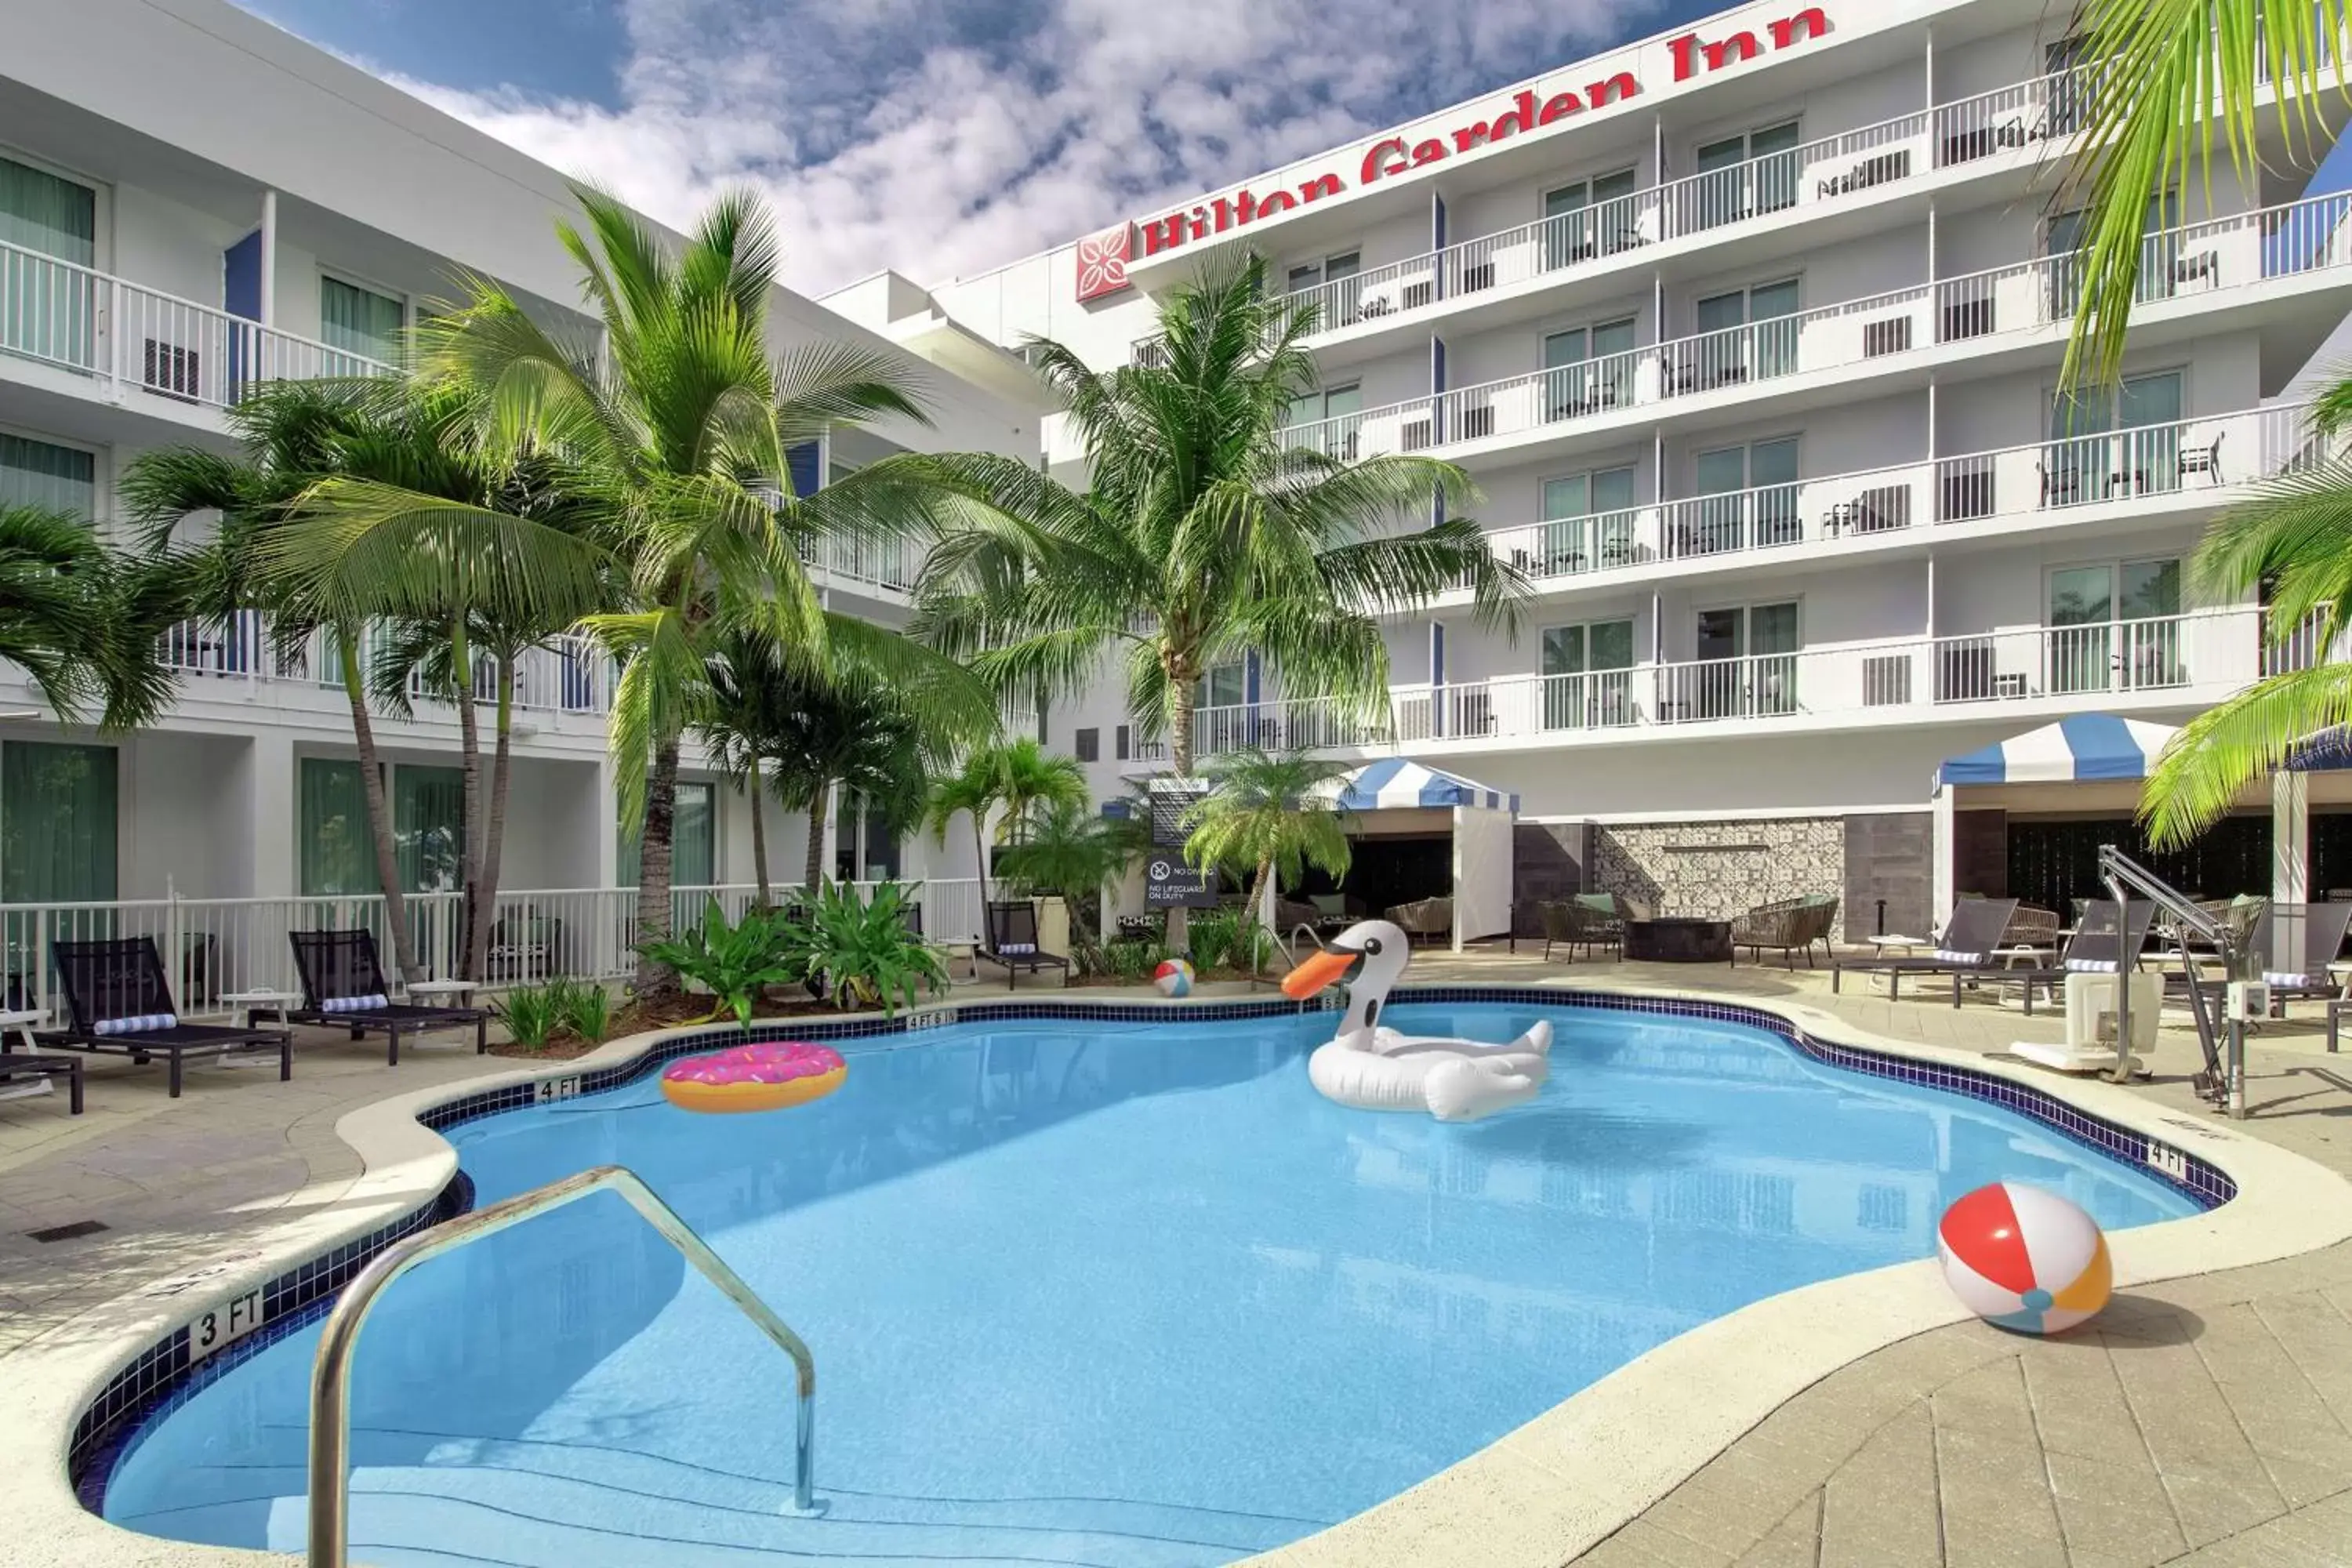 Swimming Pool in Hilton Garden Inn Miami Brickell South